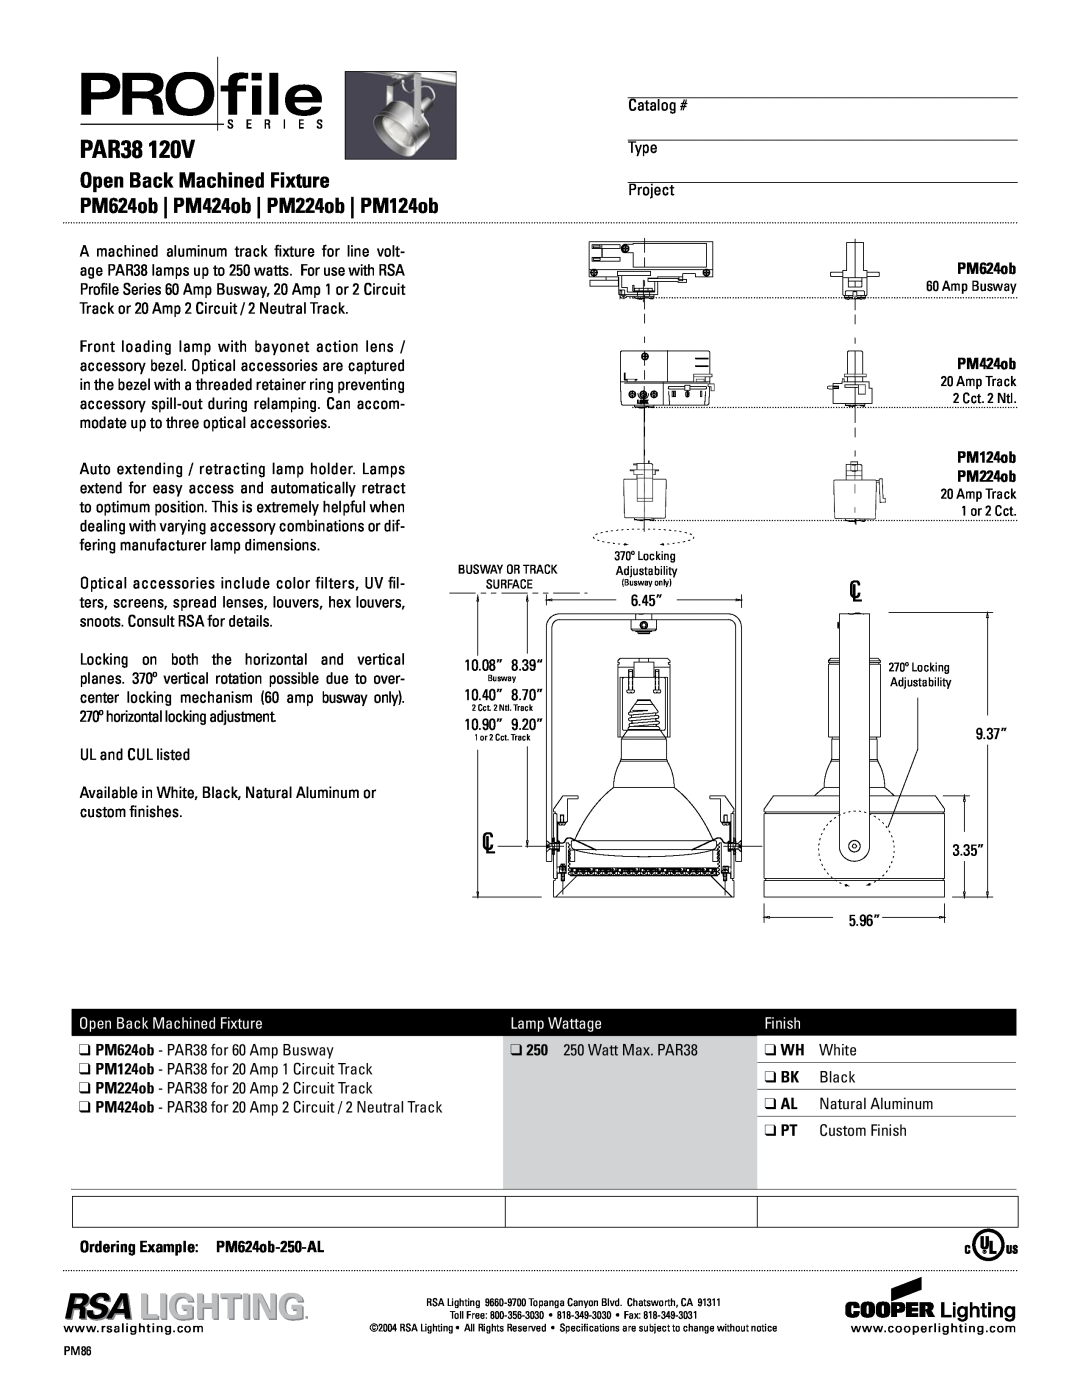 Cooper Lighting specifications PAR38, Open Back Machined Fixture, PM624ob PM424ob PM224ob PM124ob, Lamp Wattage, Finish 